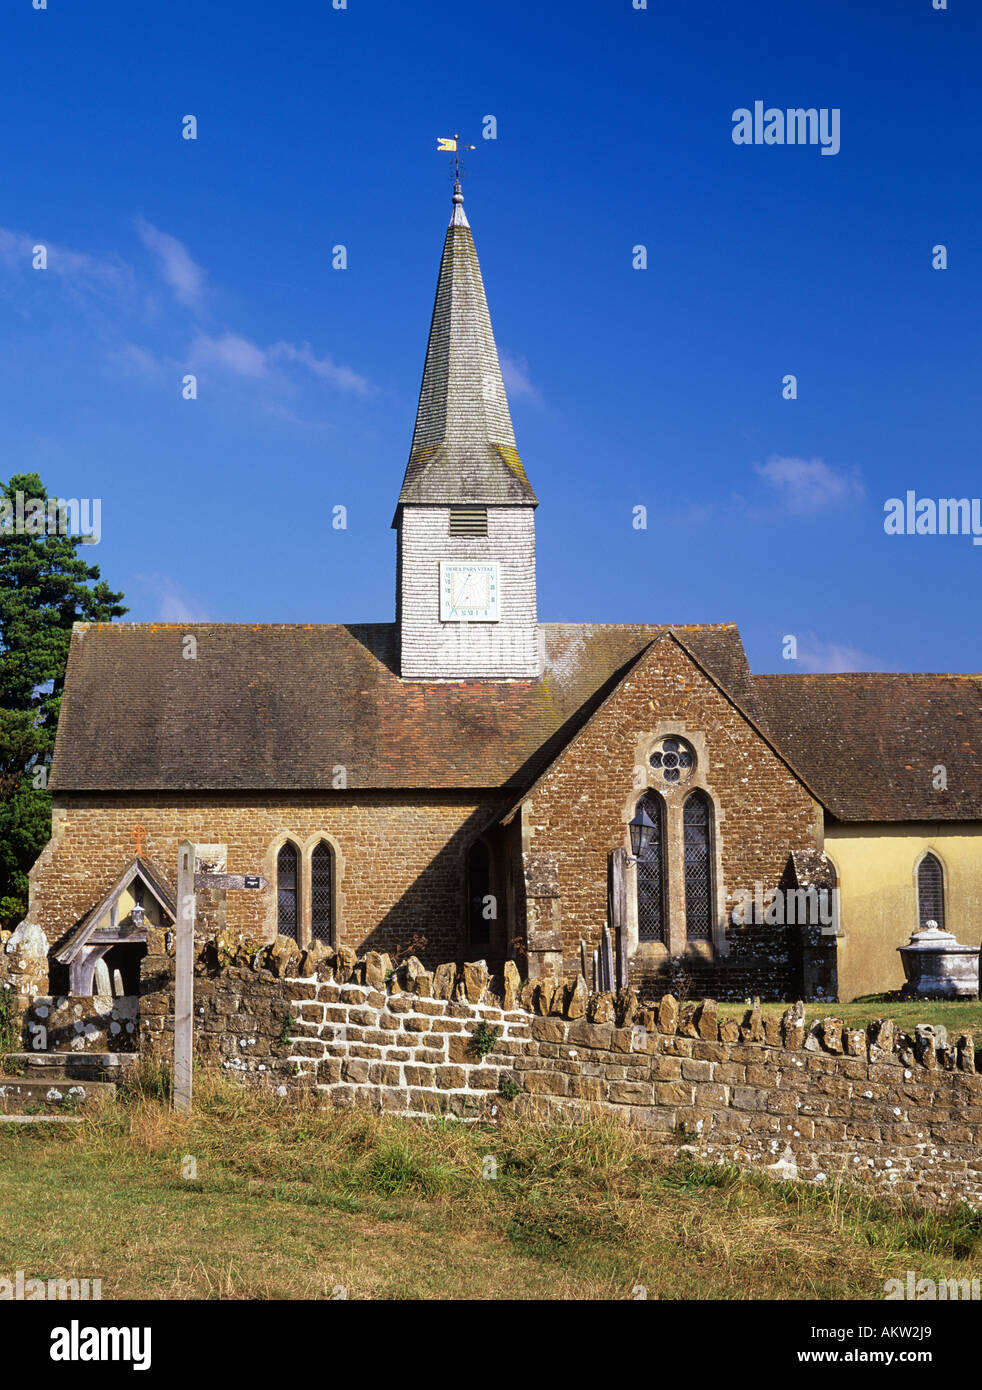 THURSLEY PARISH CHURCH of 'St Michael of all Angels' lies on the 'Greensand Way' Thursley Surrey England UK Stock Photo